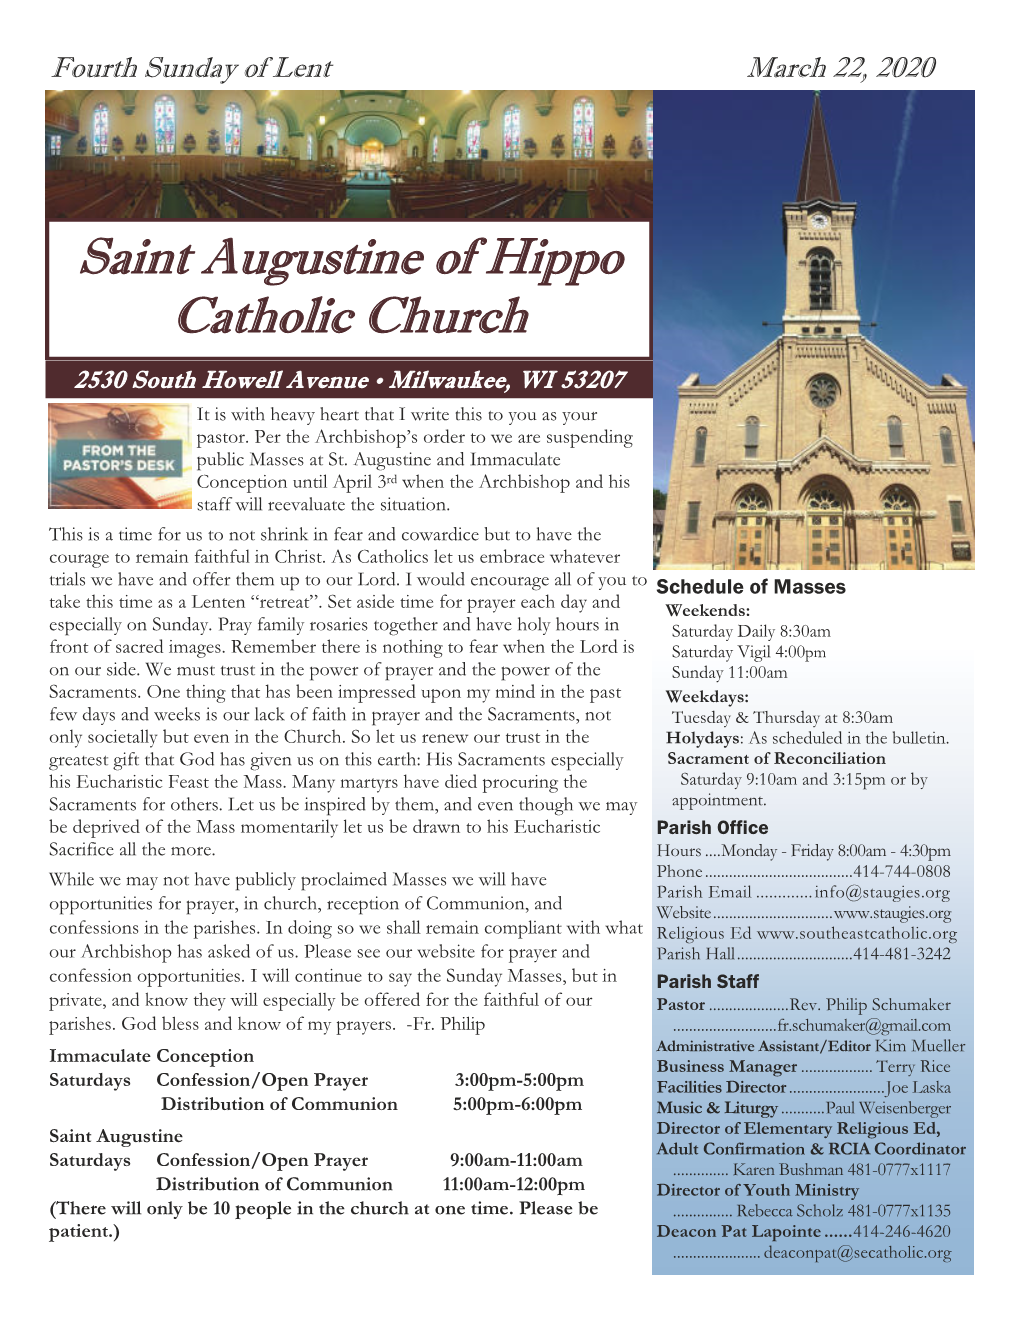 Saint Augustine of Hippo Catholic Church